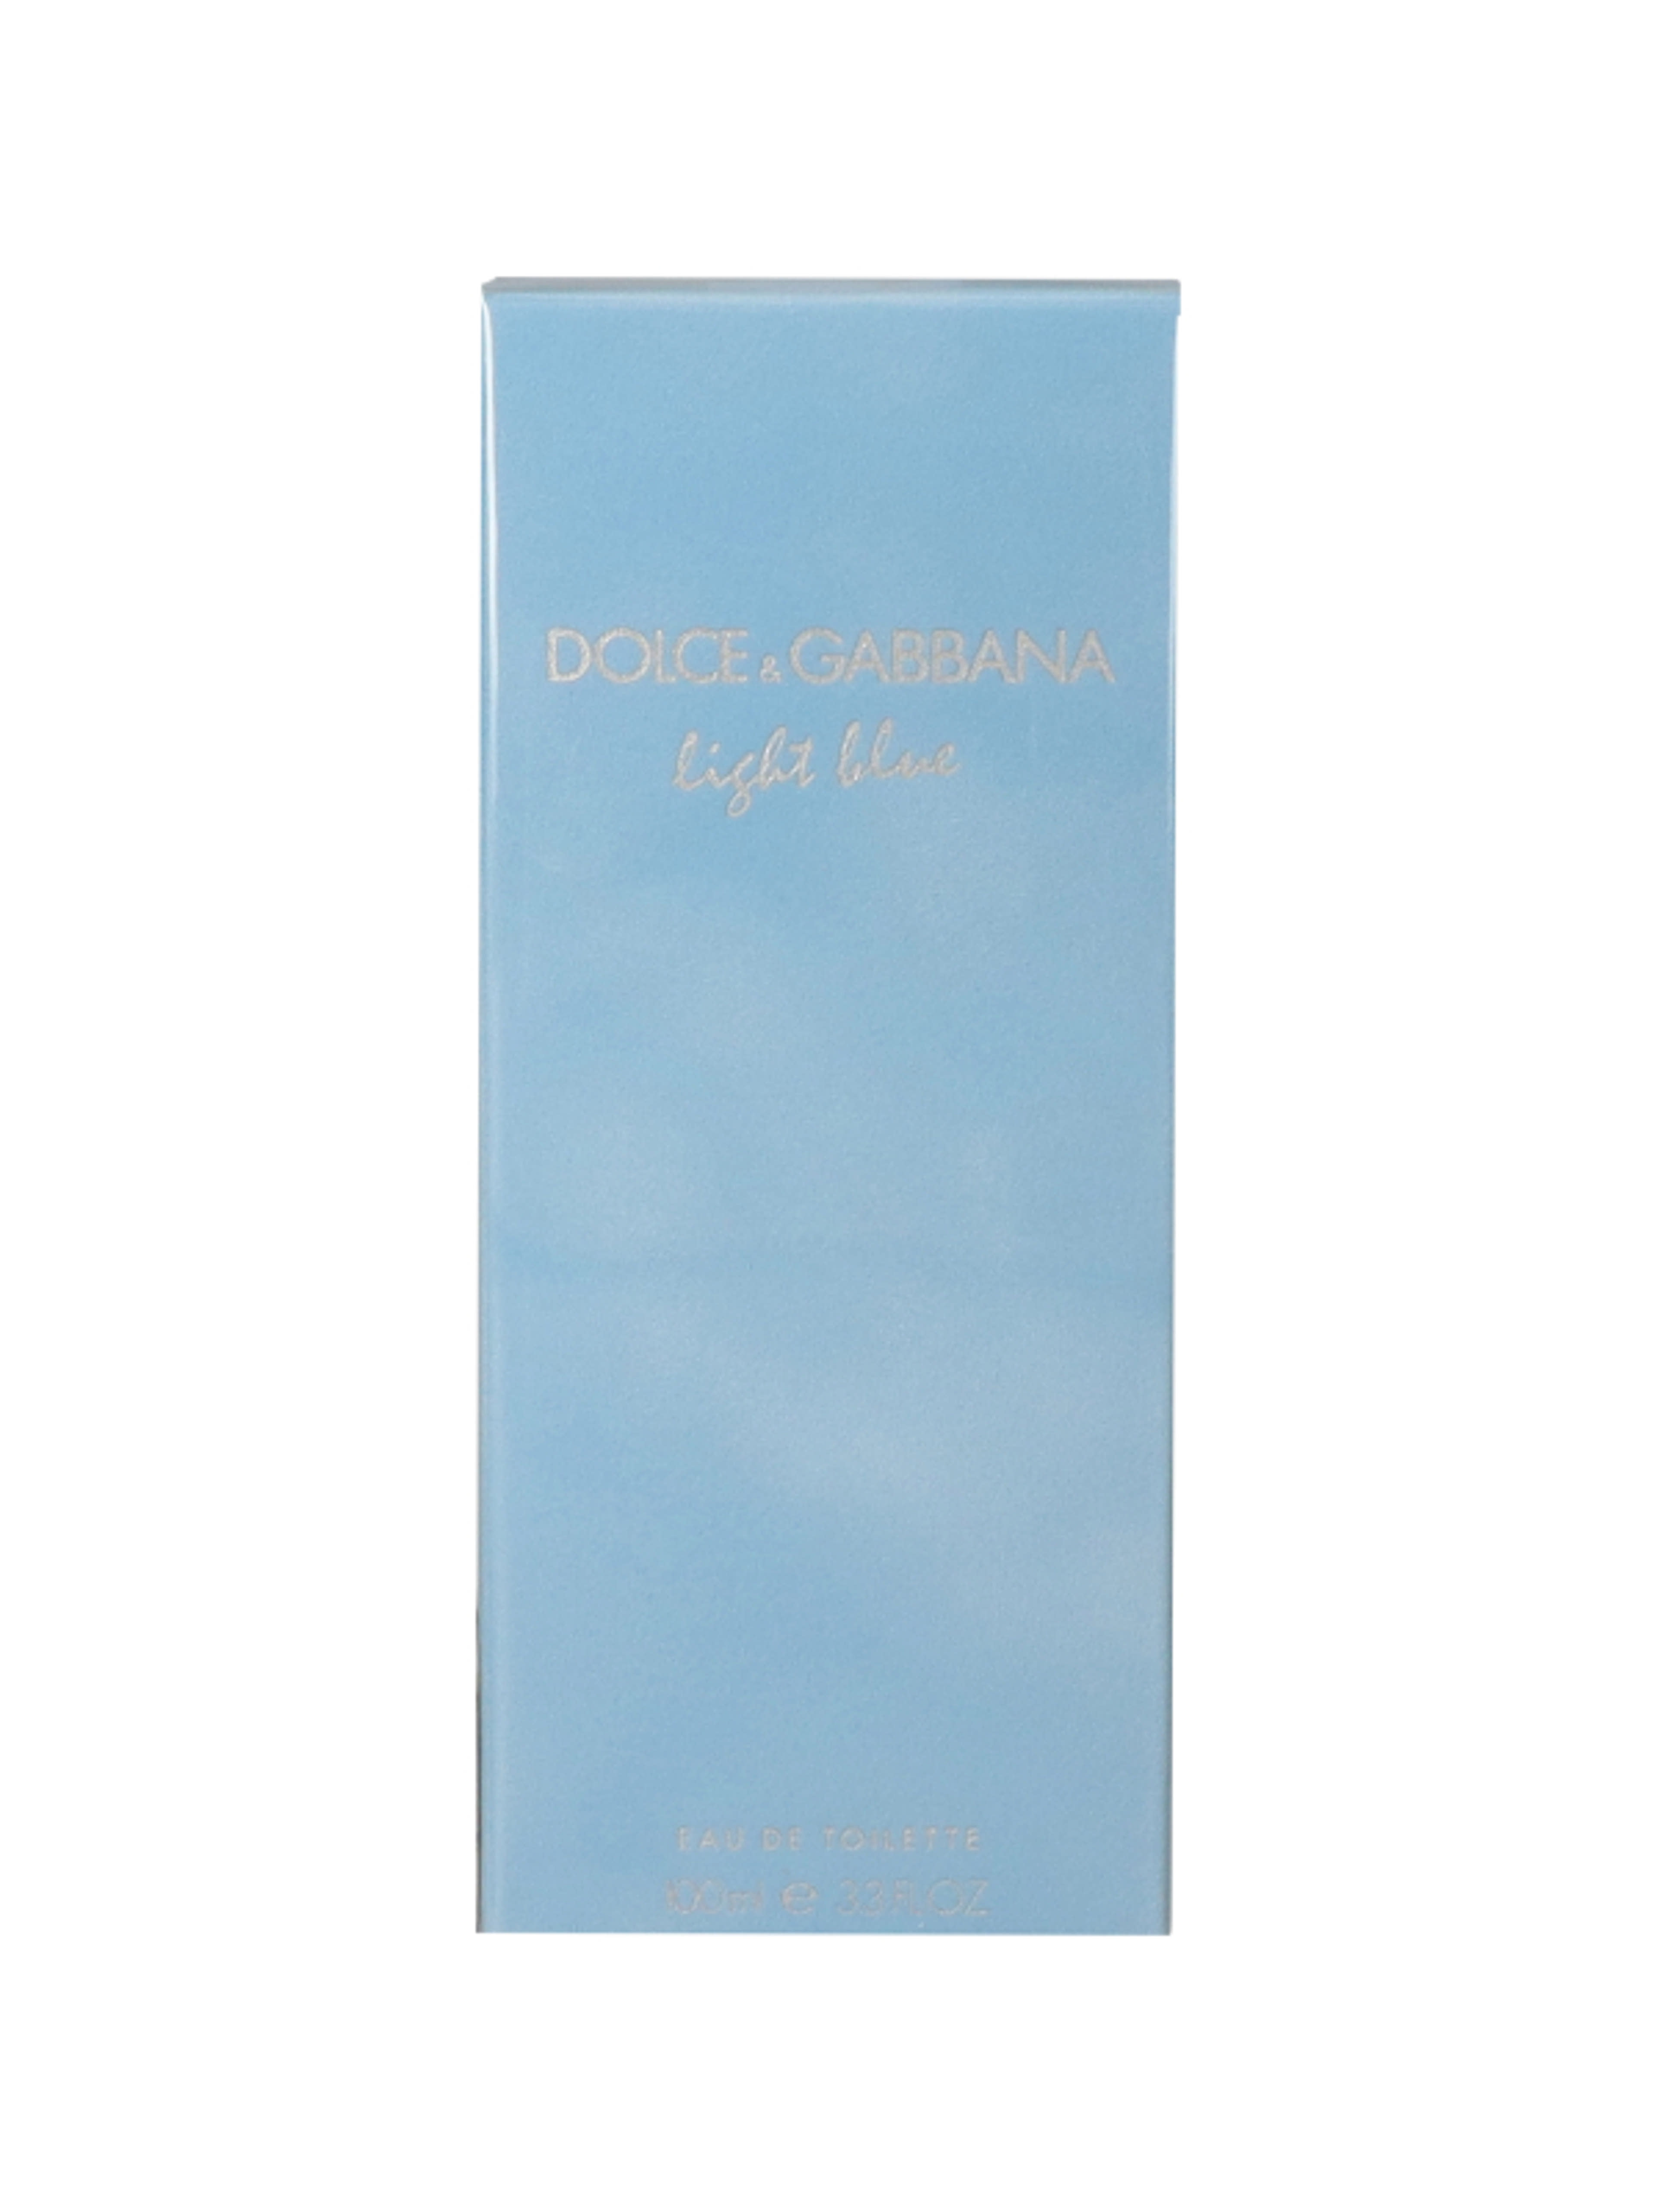 Dolce&Gabana Light Blue női Eau de Toilette - 100 ml